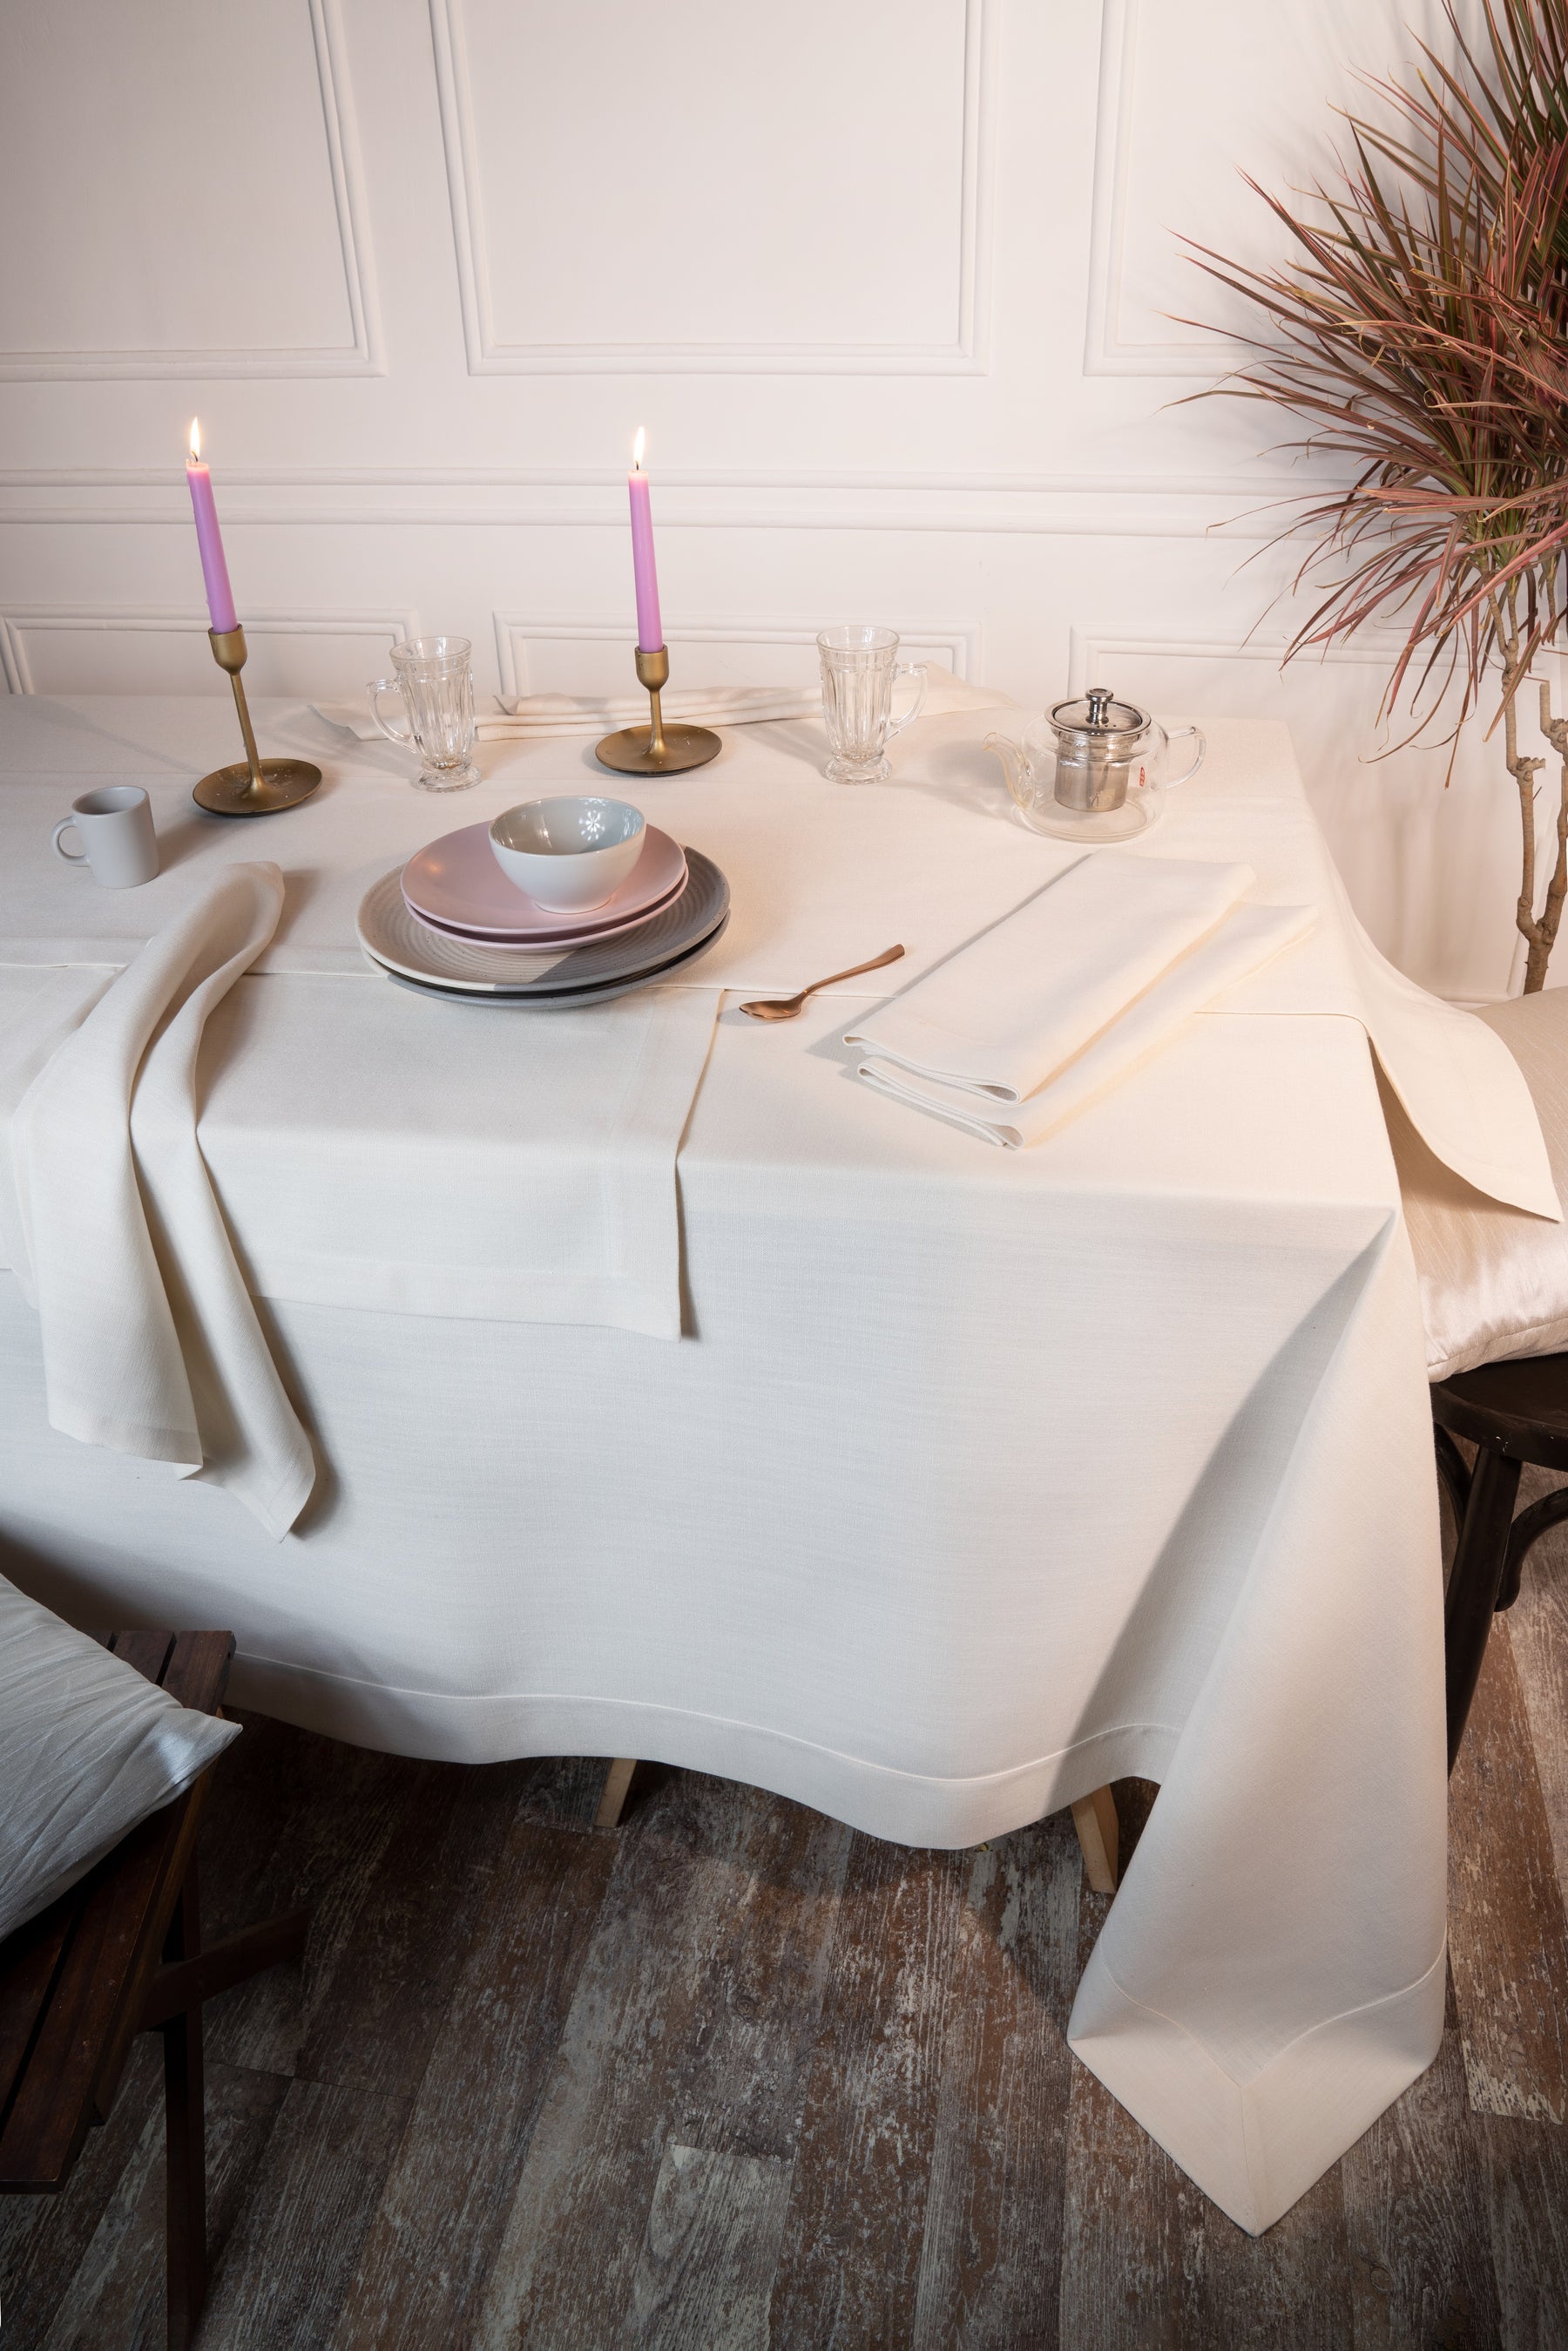 Ivory Linen Textured Tablecloth - Mitered Corner